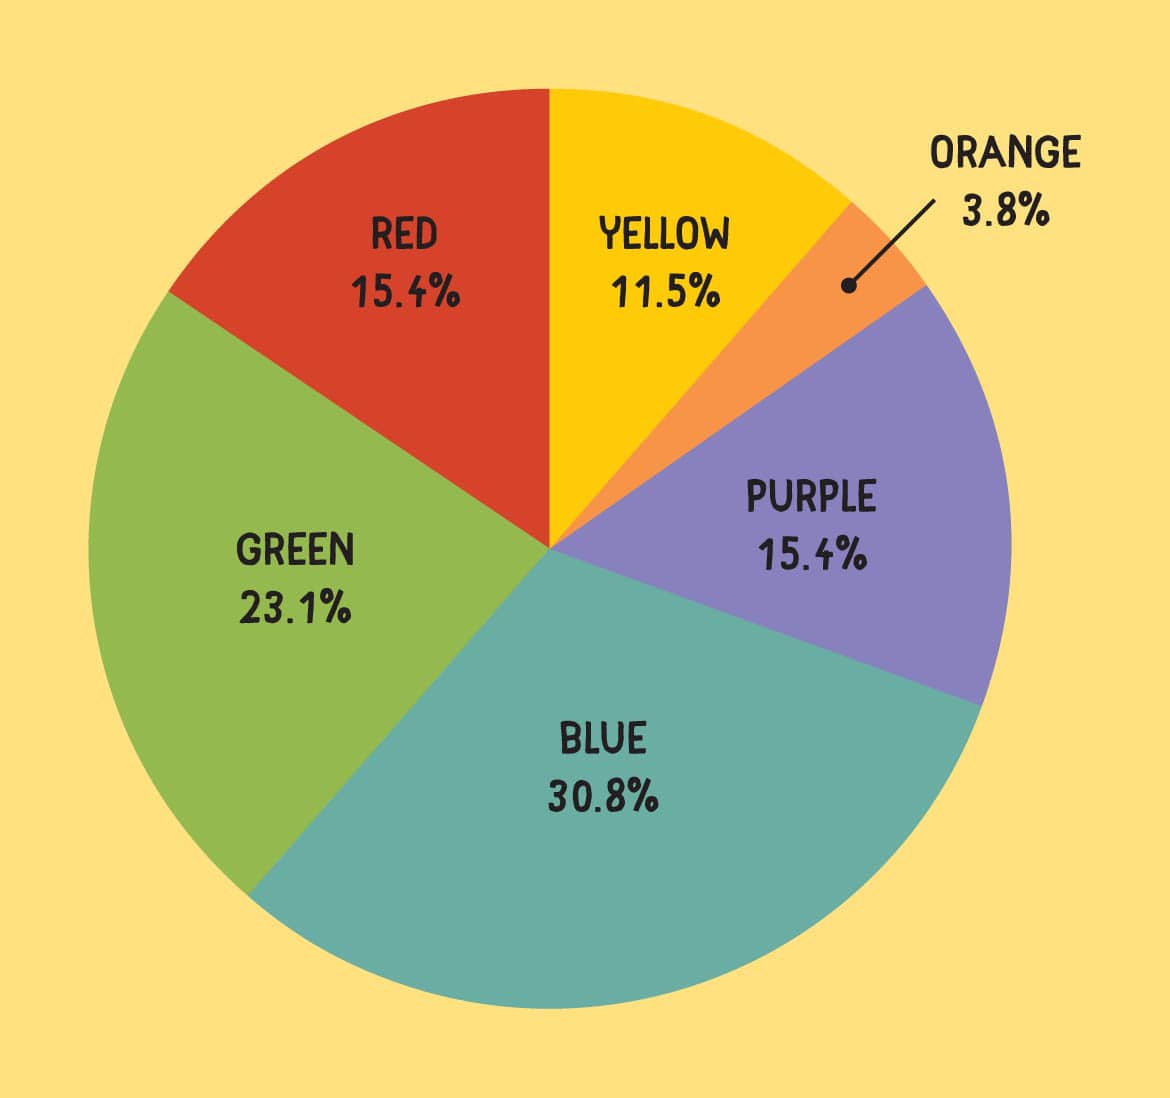 ORANGE 3.8% RED 15.4% YELLOW 11.5% GREEN 23.1% PURPLE 15.4% BLUE 30.8%